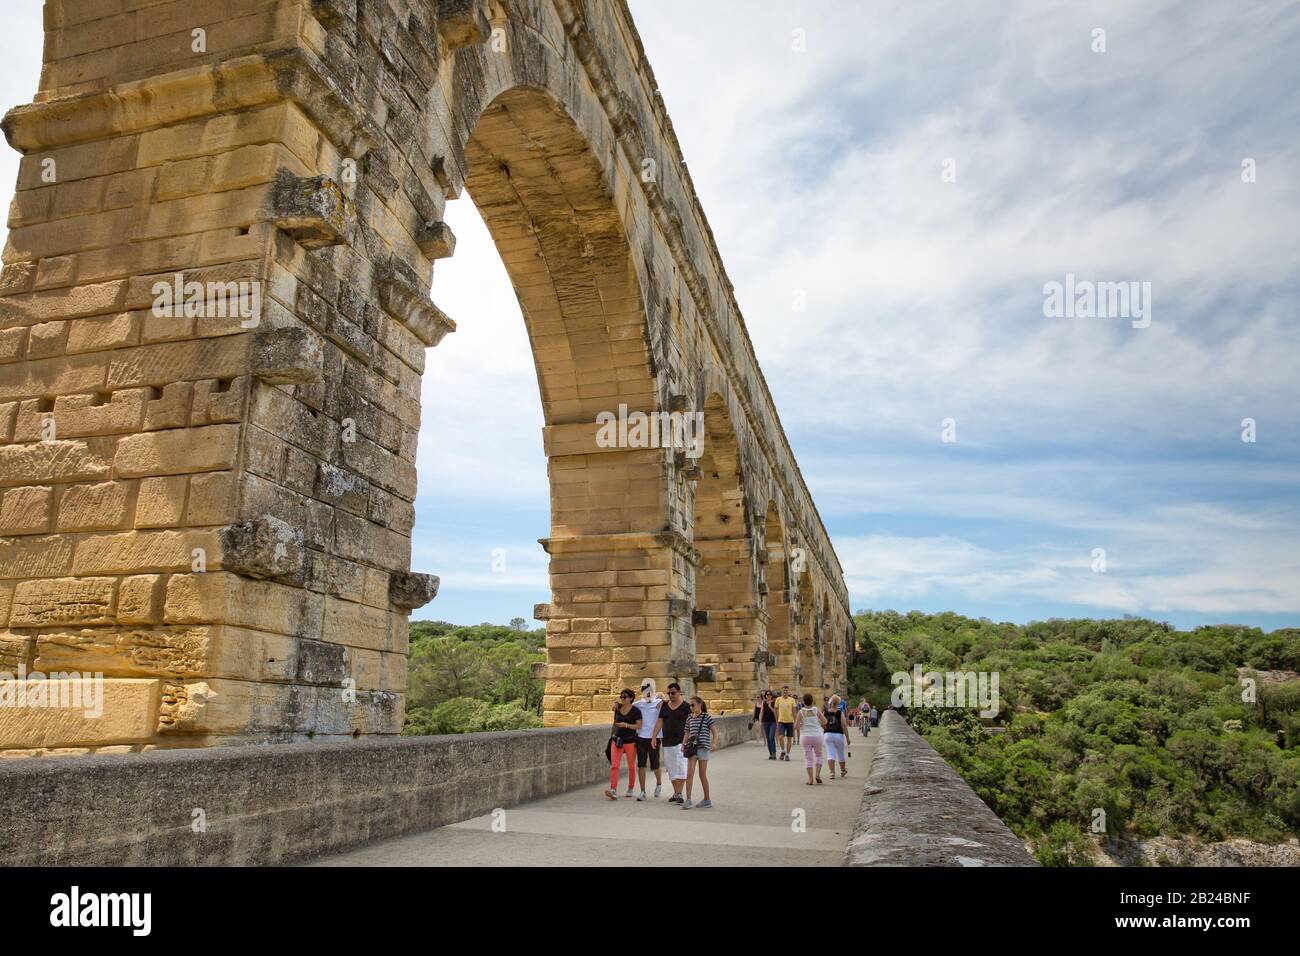 Pont du Gard, Provenza, Francia - Jun 05 2017: Turistas que caminan por el Pont du Gard Foto de stock